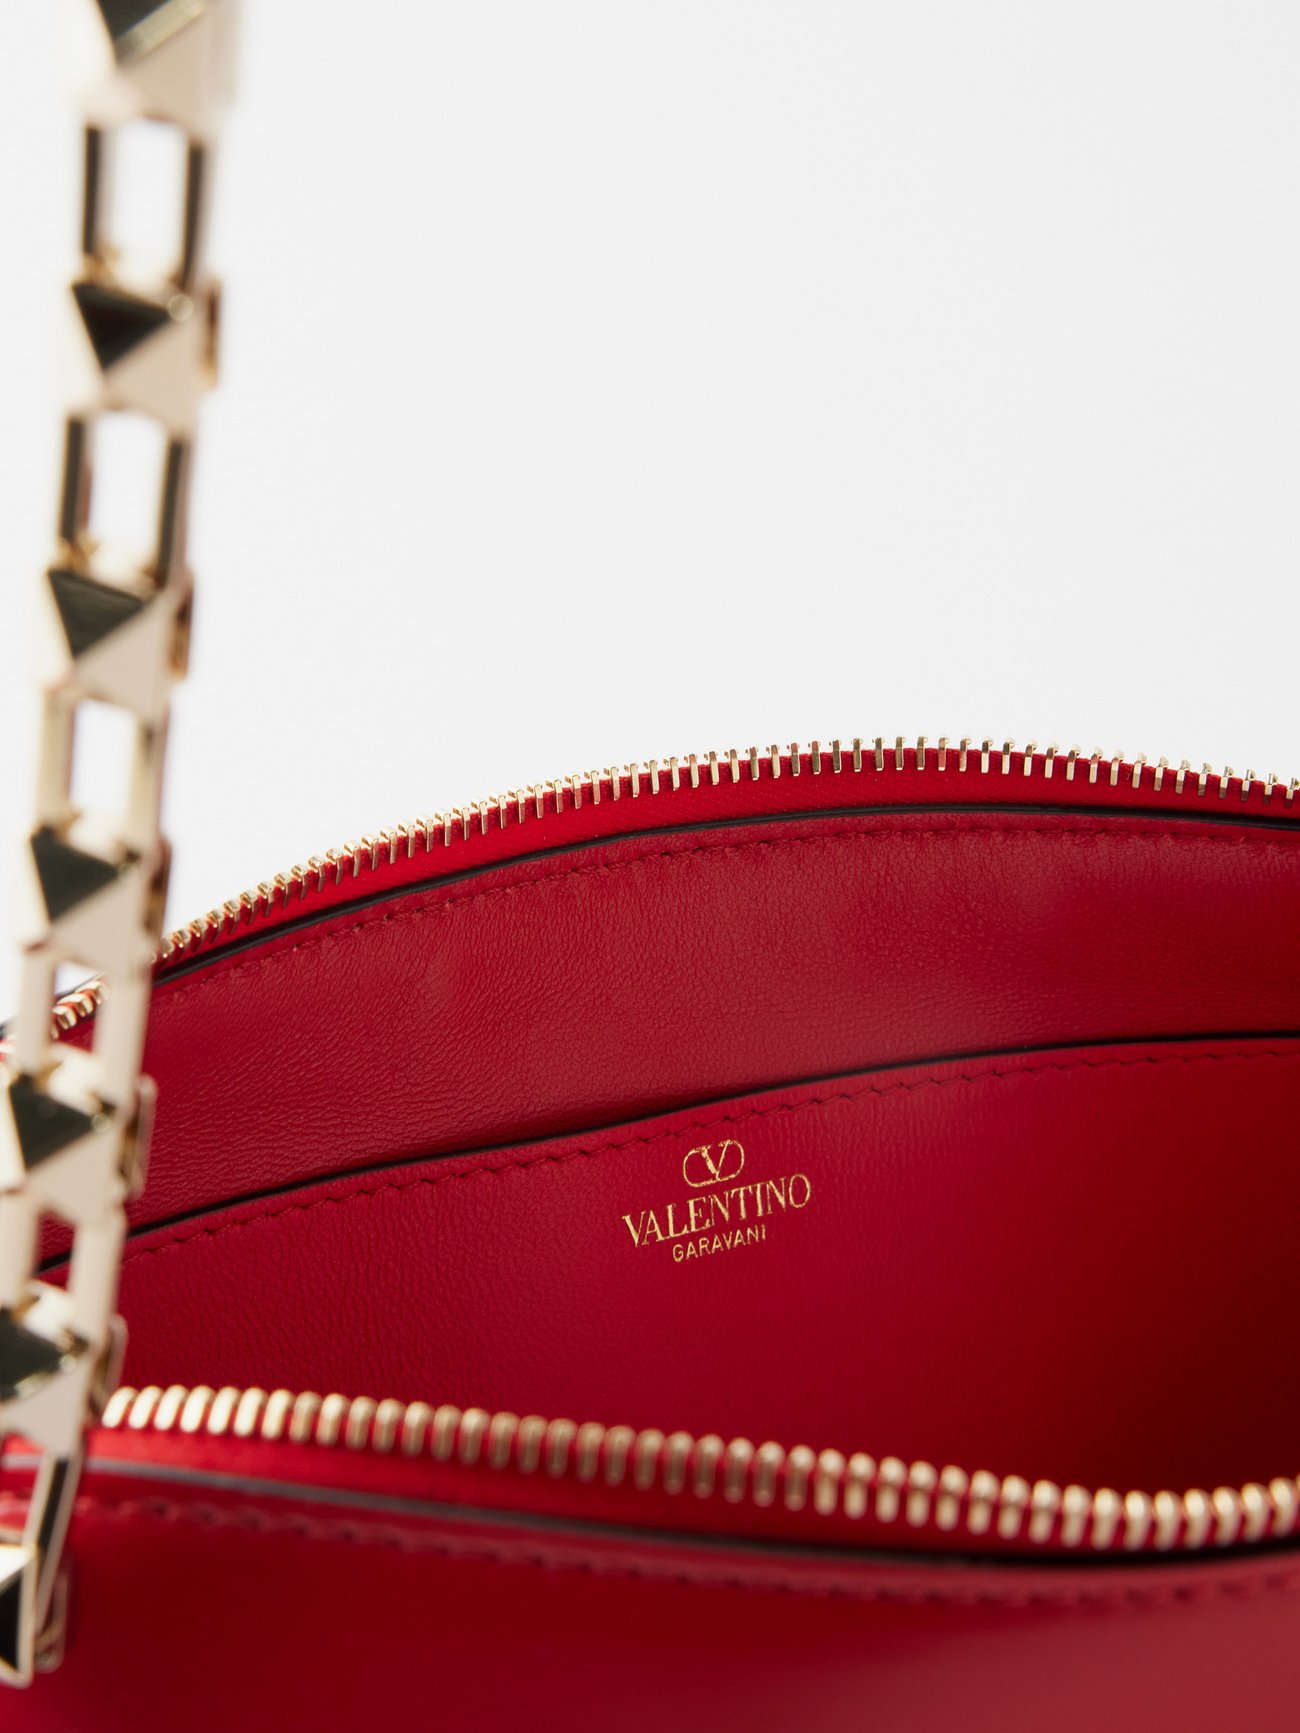 Valentino Garavani Rockstud Leather Clutch Bag In Red